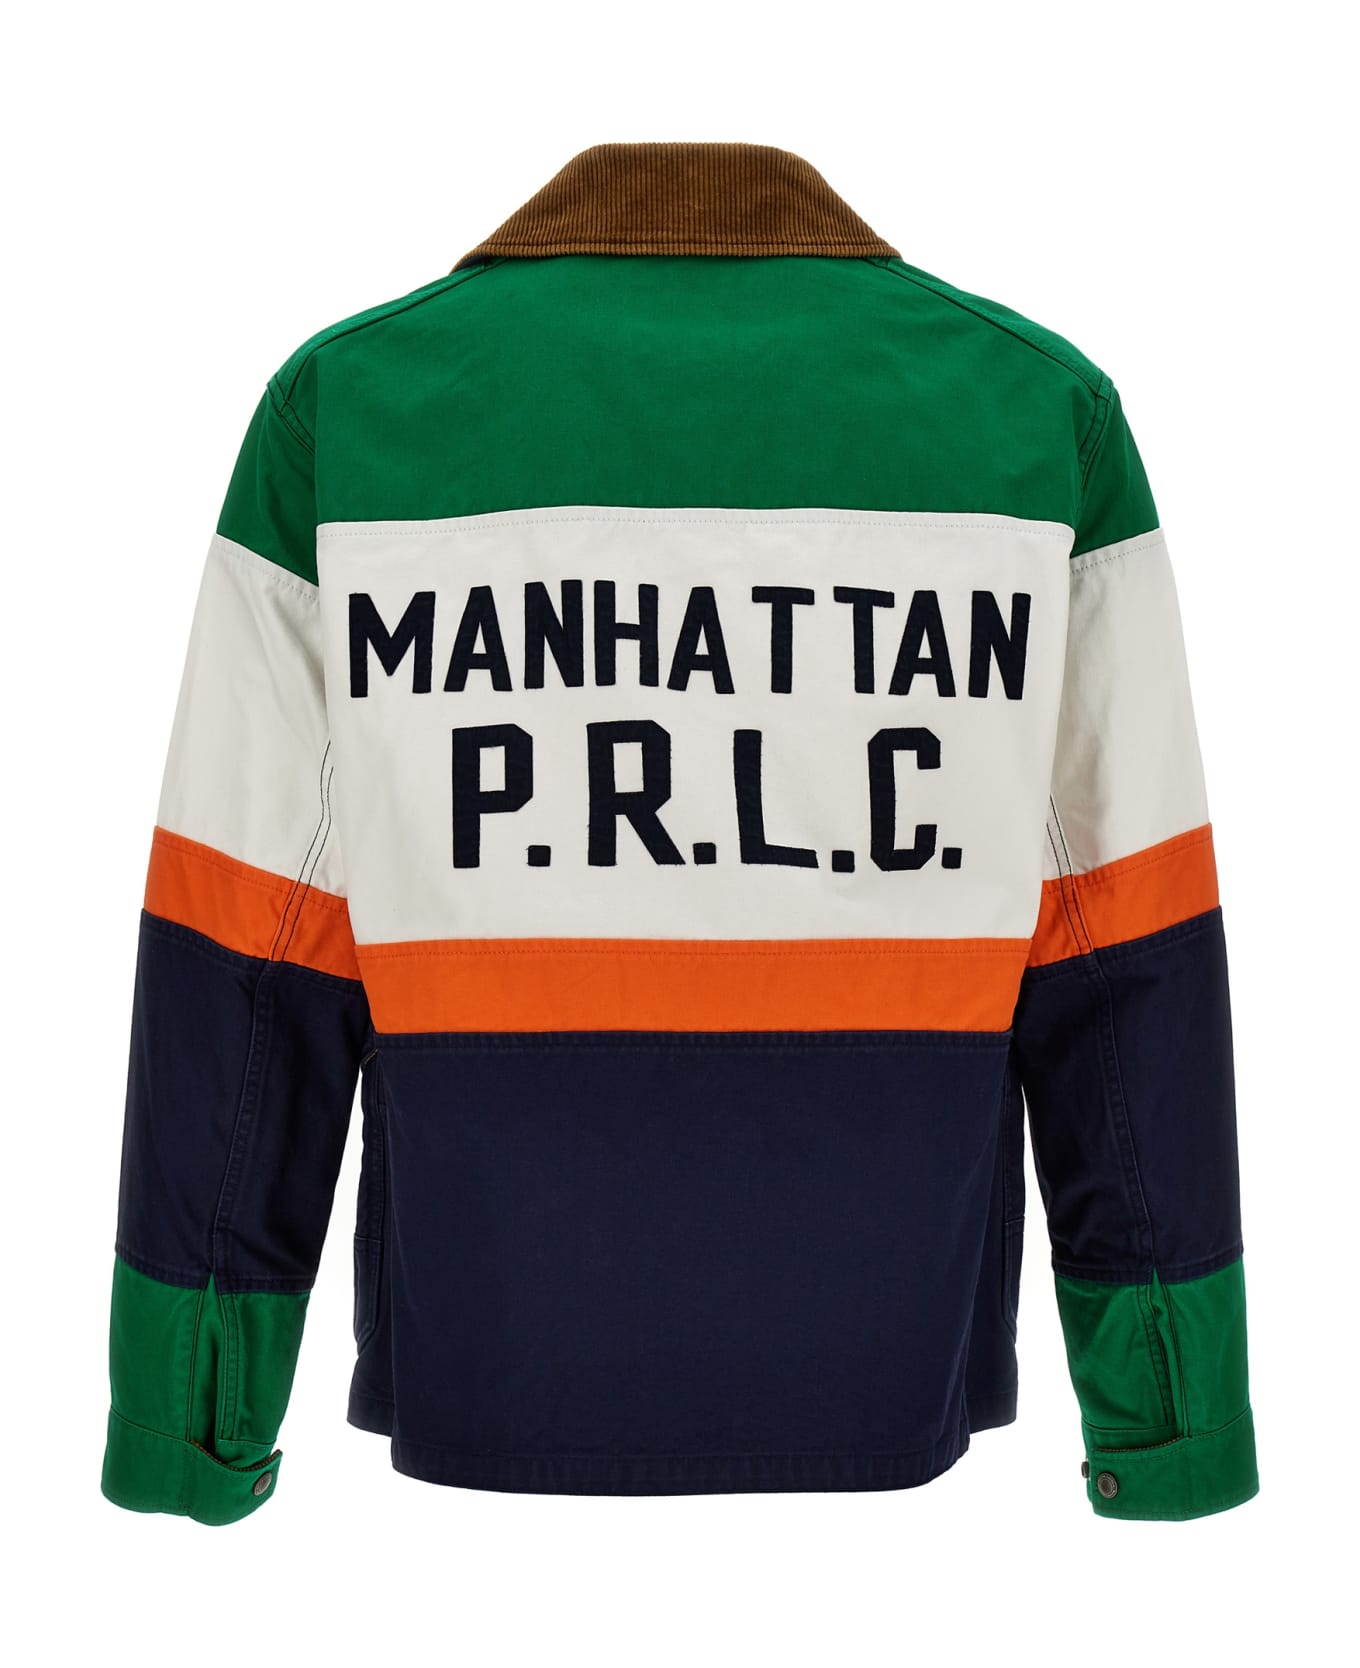 Polo Ralph Lauren 'sailor' Jacket - Multicolor ジャケット